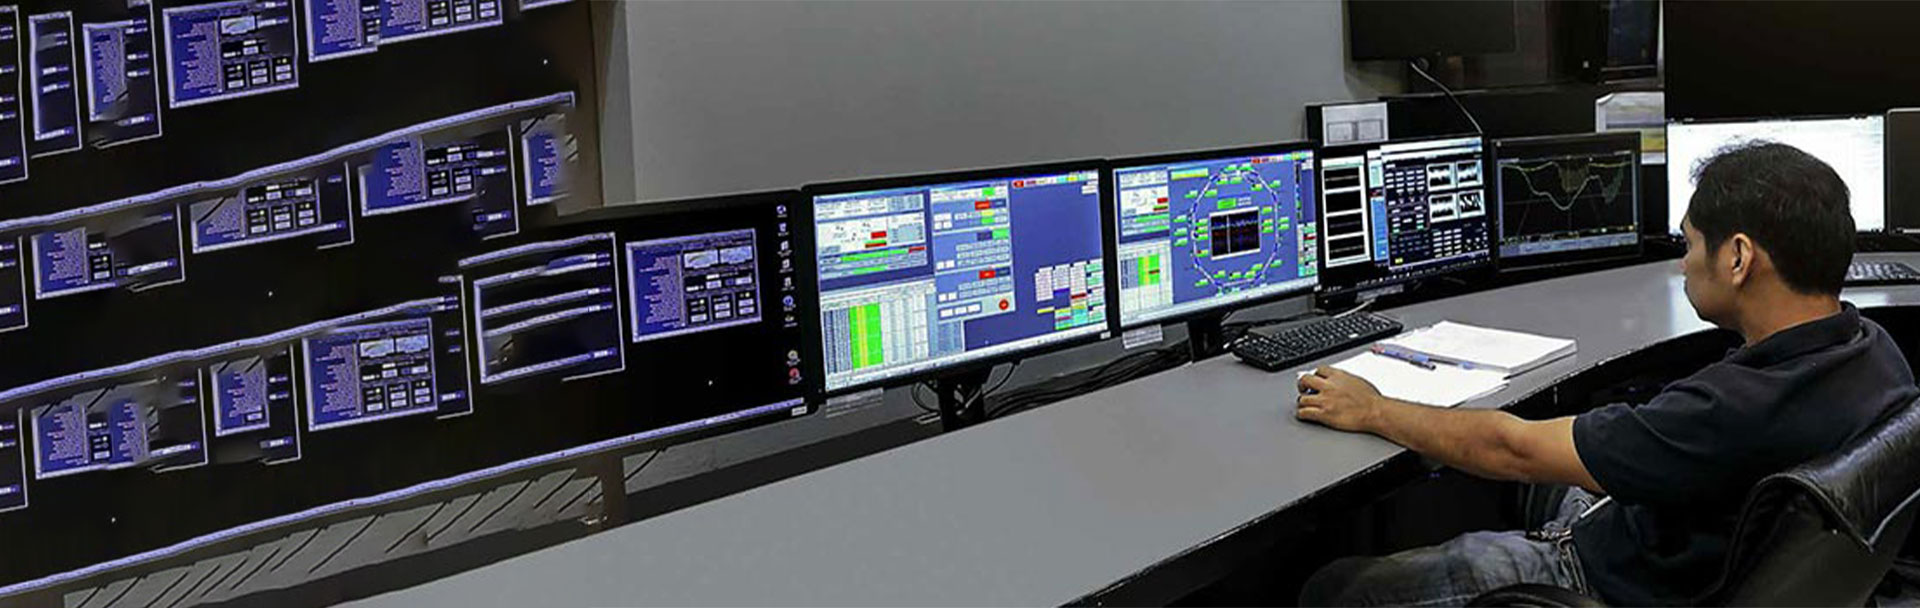 Alumina-Refinery-Uses-Emerald-KVM-to-Control-Its-New-Automation-System